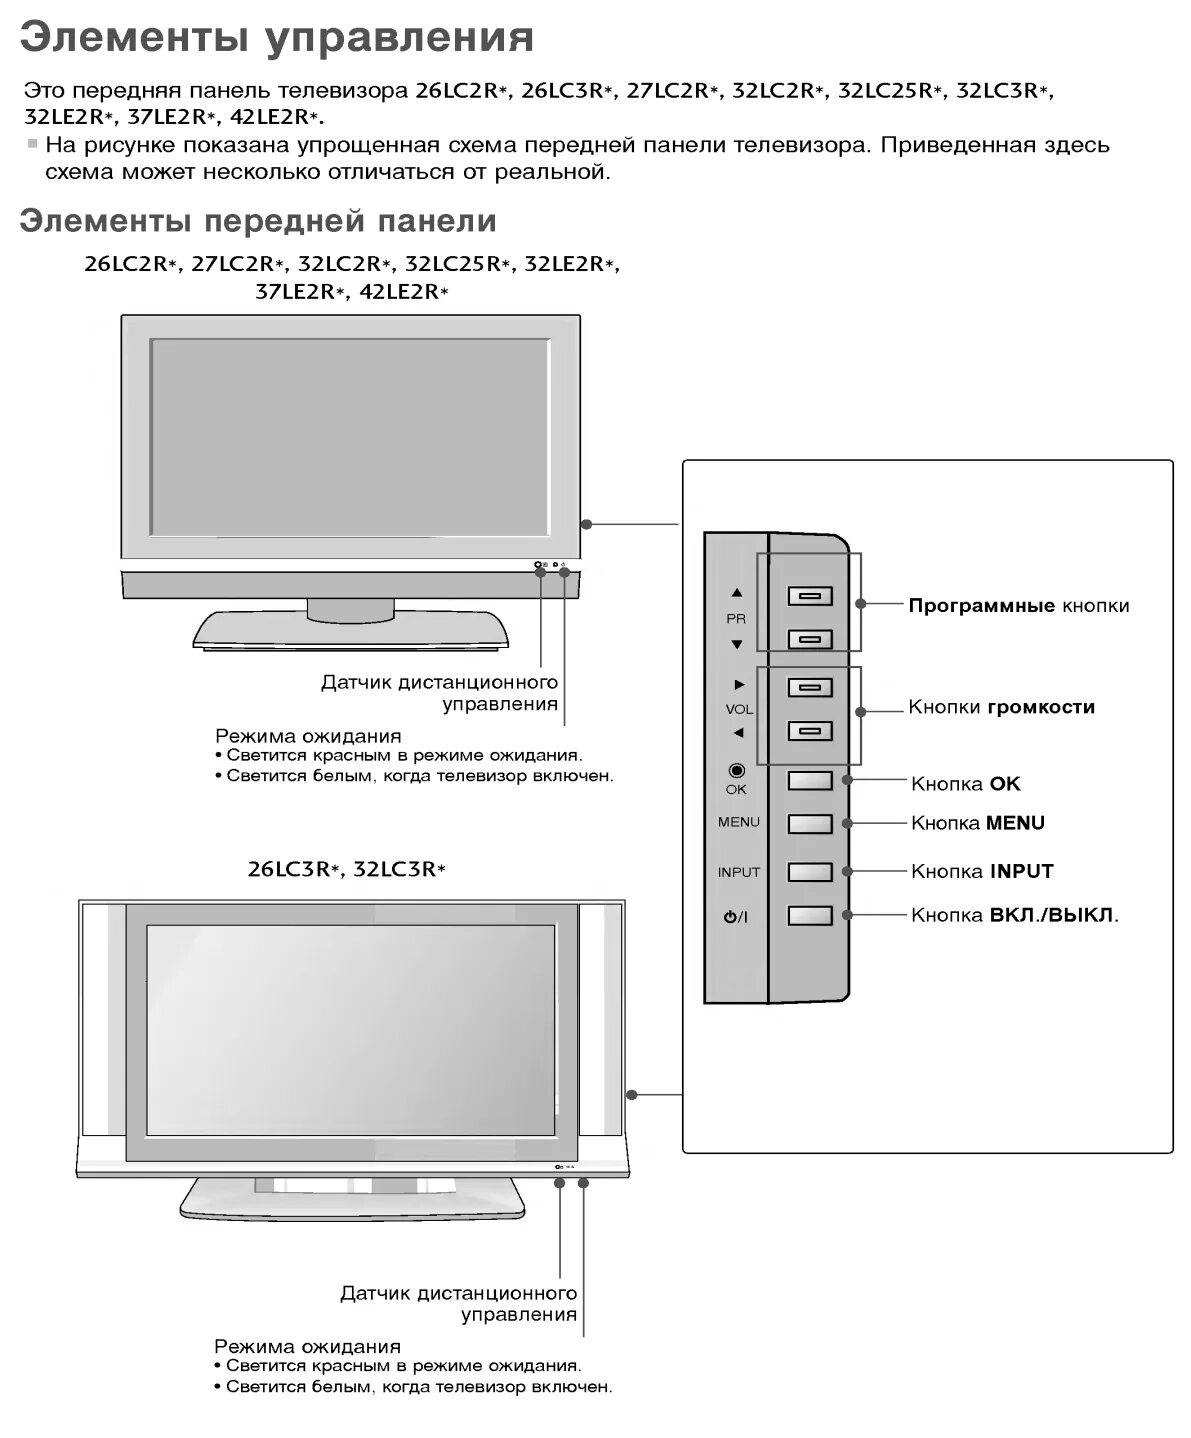 LG 32lc2r схема. Техническое описание и телевизора. Технические характеристики телевизора. Потребительские свойства телевизоров.